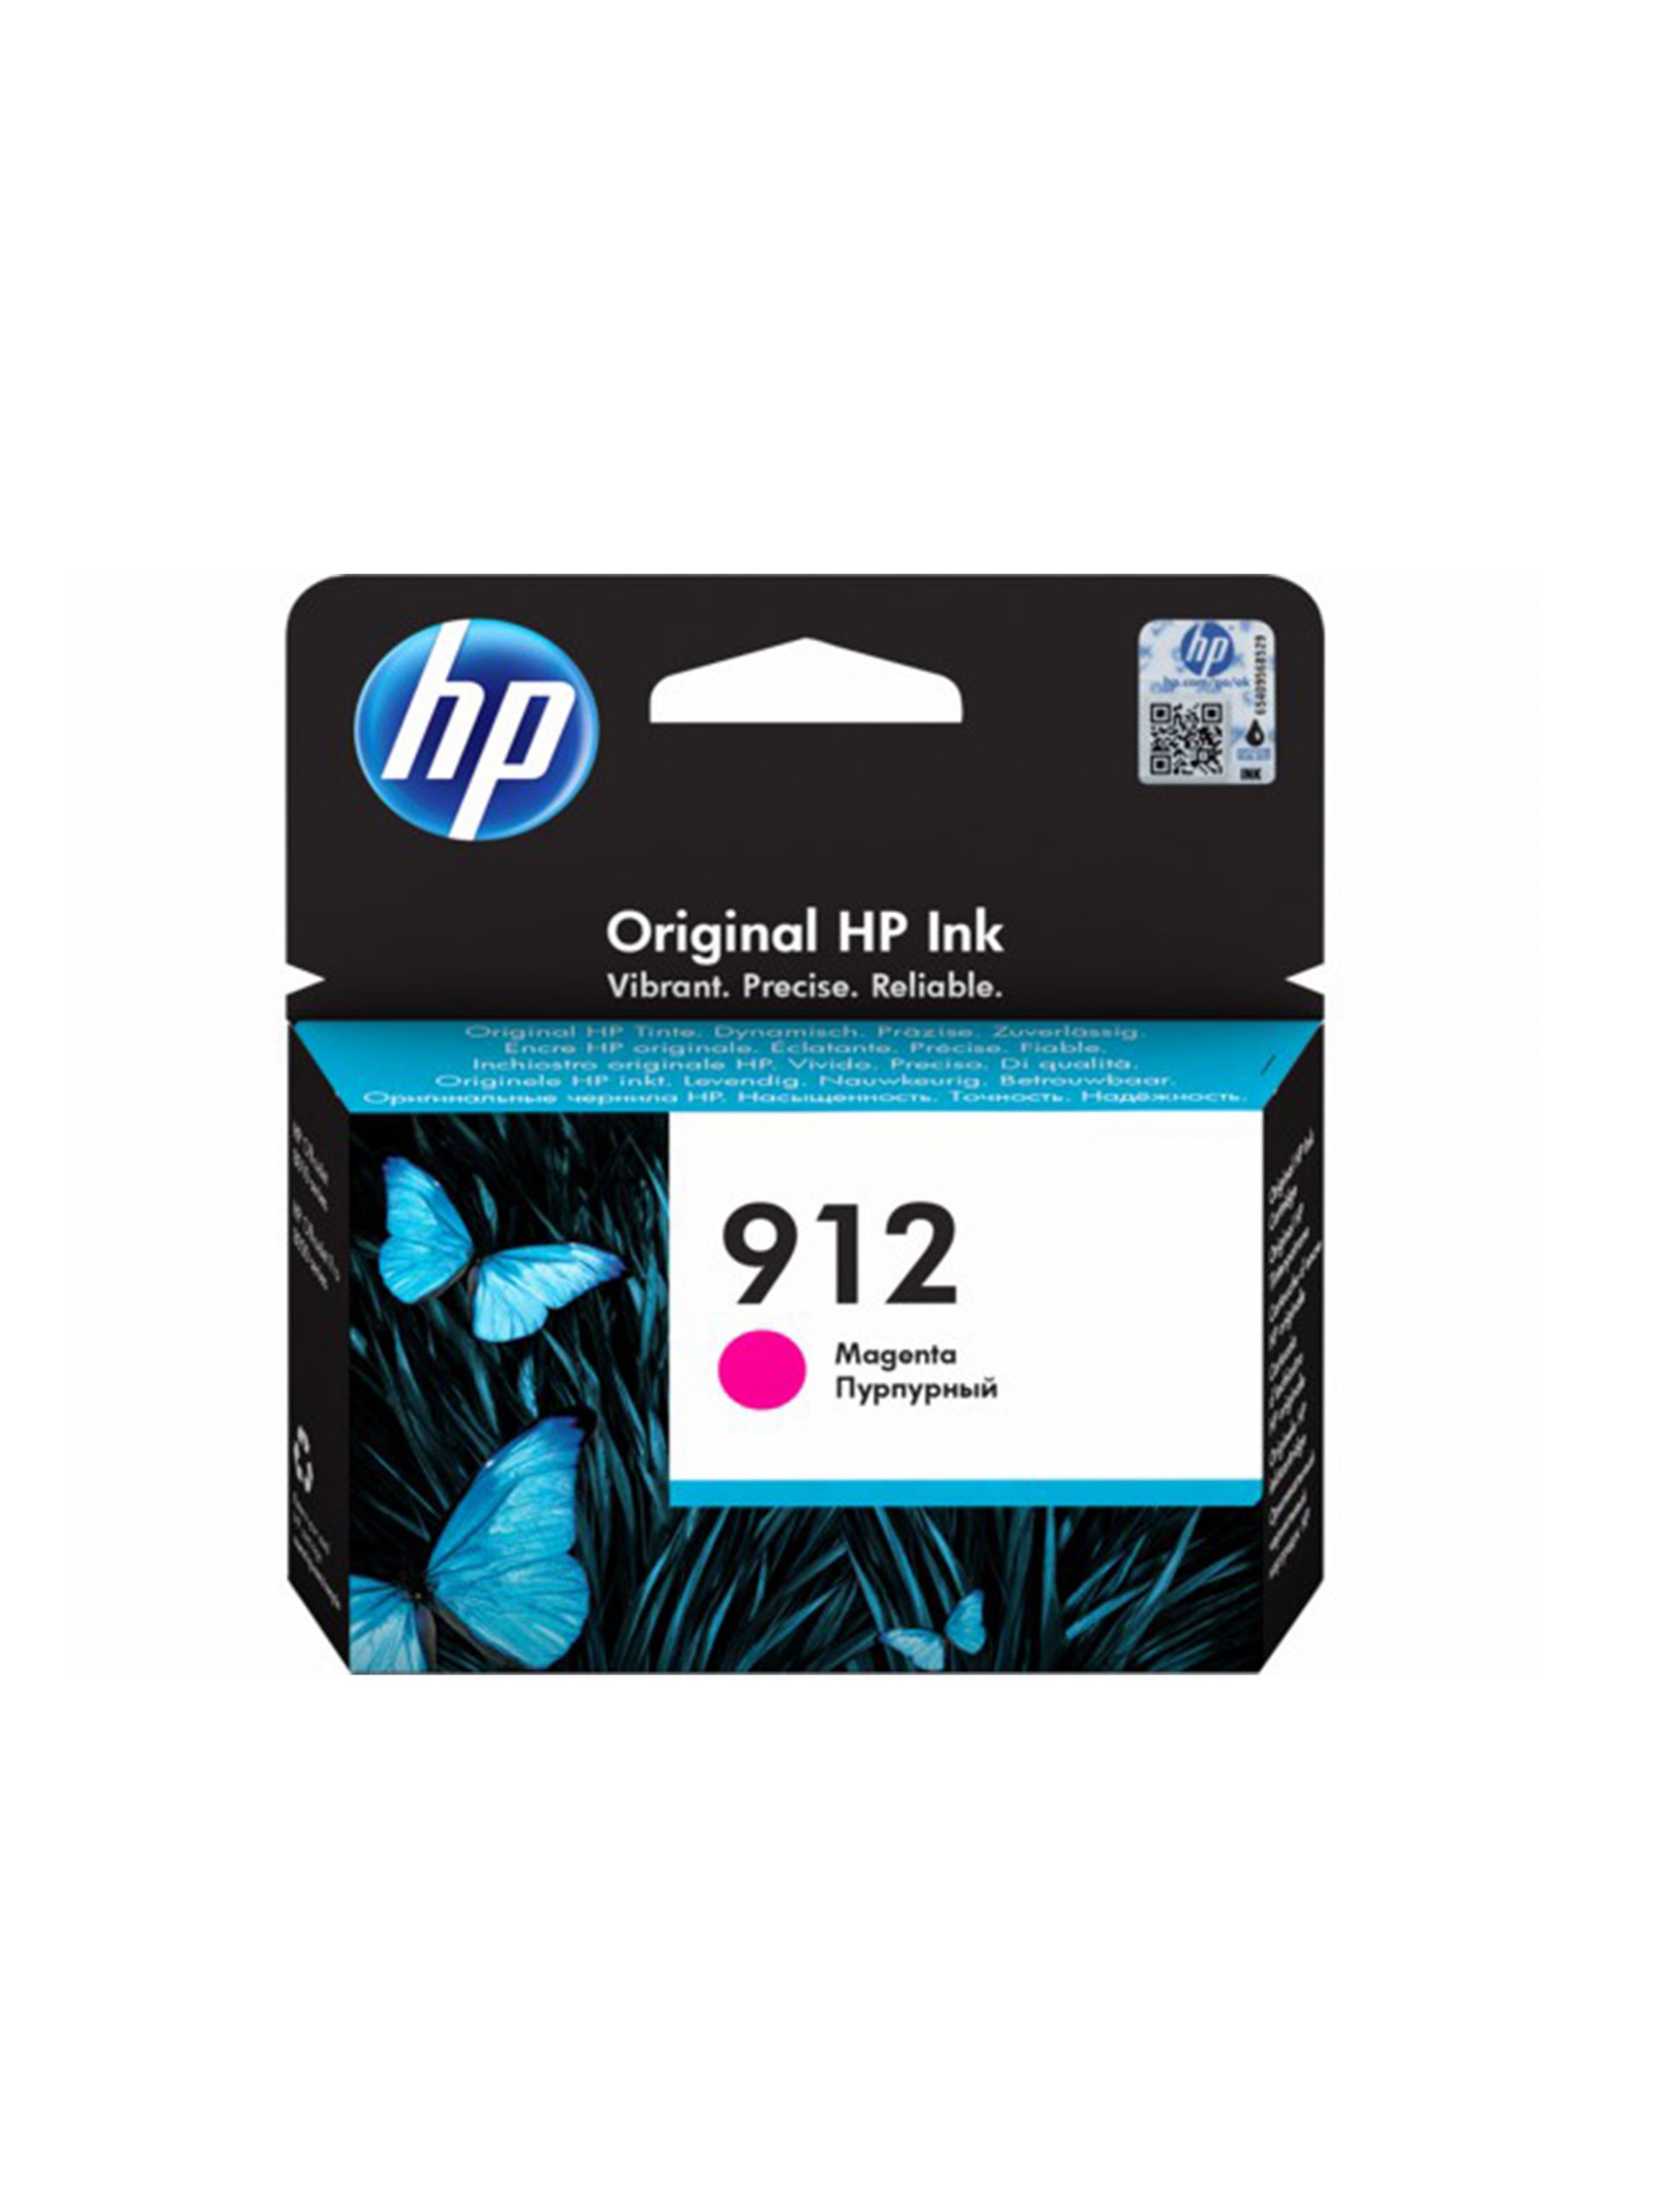 HP 912 Magenta Ink Cartridge-3YL78AE